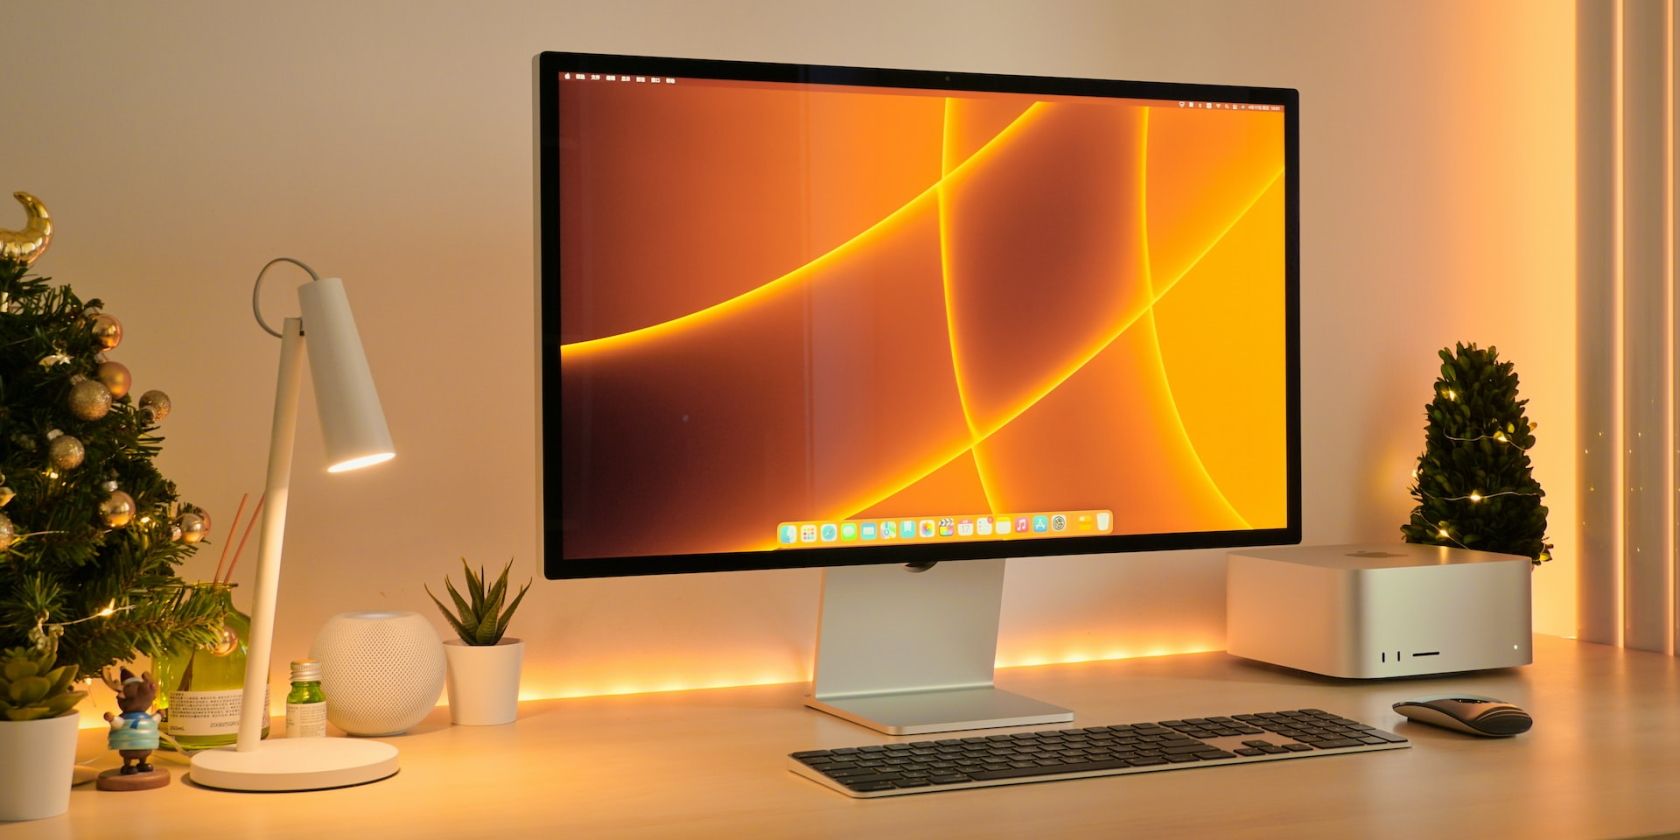 Mac Studio on a desk